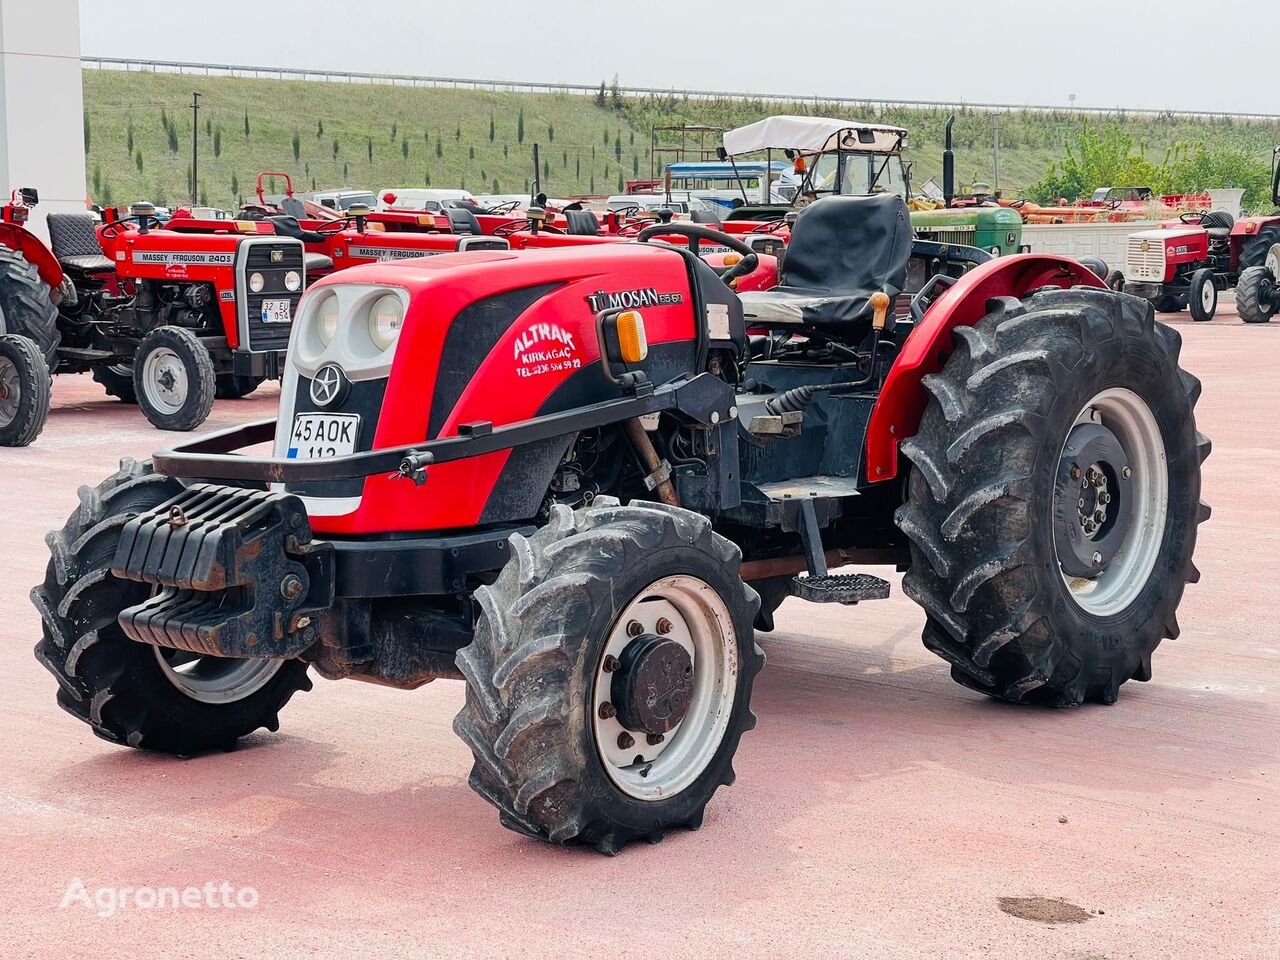 Tümosan 6560 mini tractor